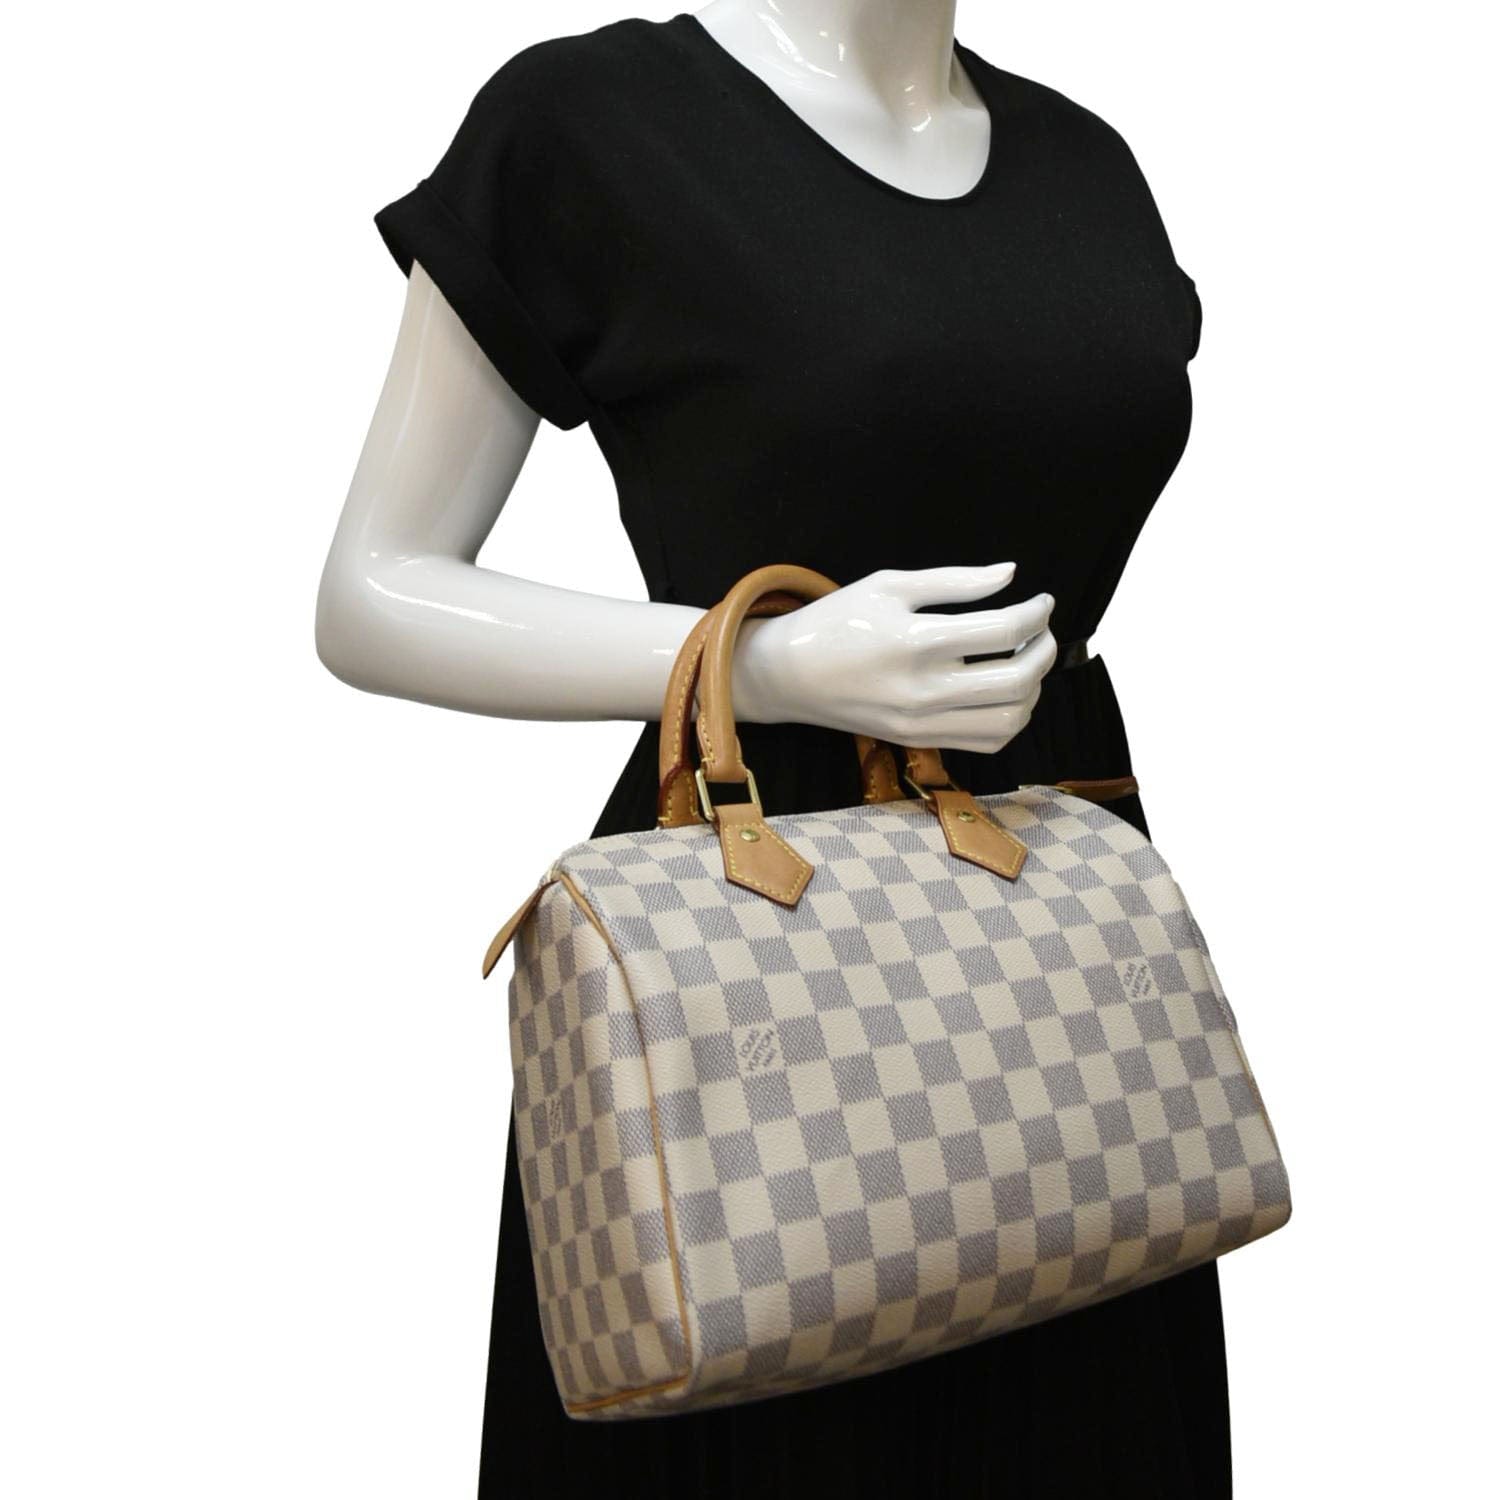 Louis Vuitton Speedy 25 Damier Azur Handbag